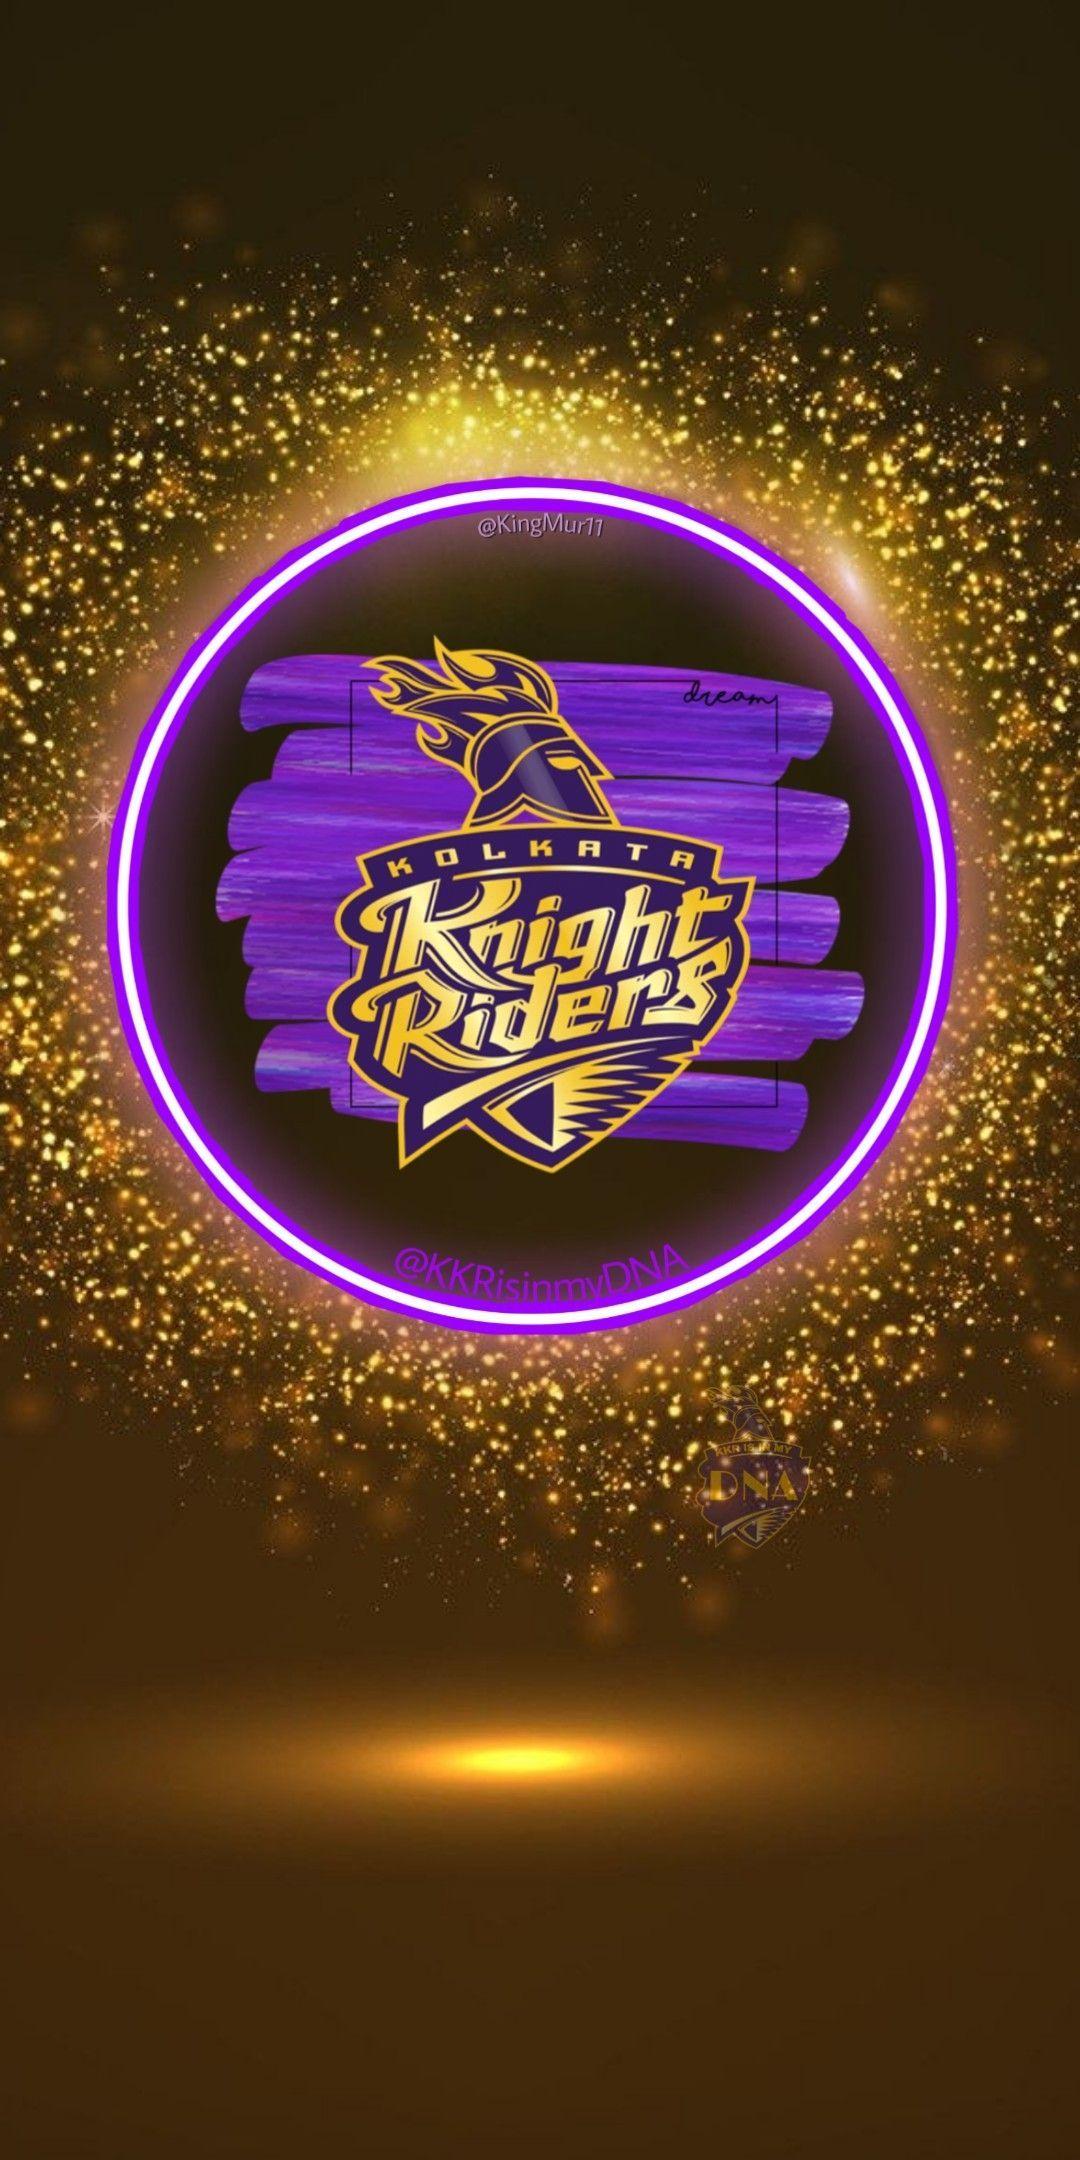 Kolkata Knight Riders Wallpapers - Top Free Kolkata Knight ...